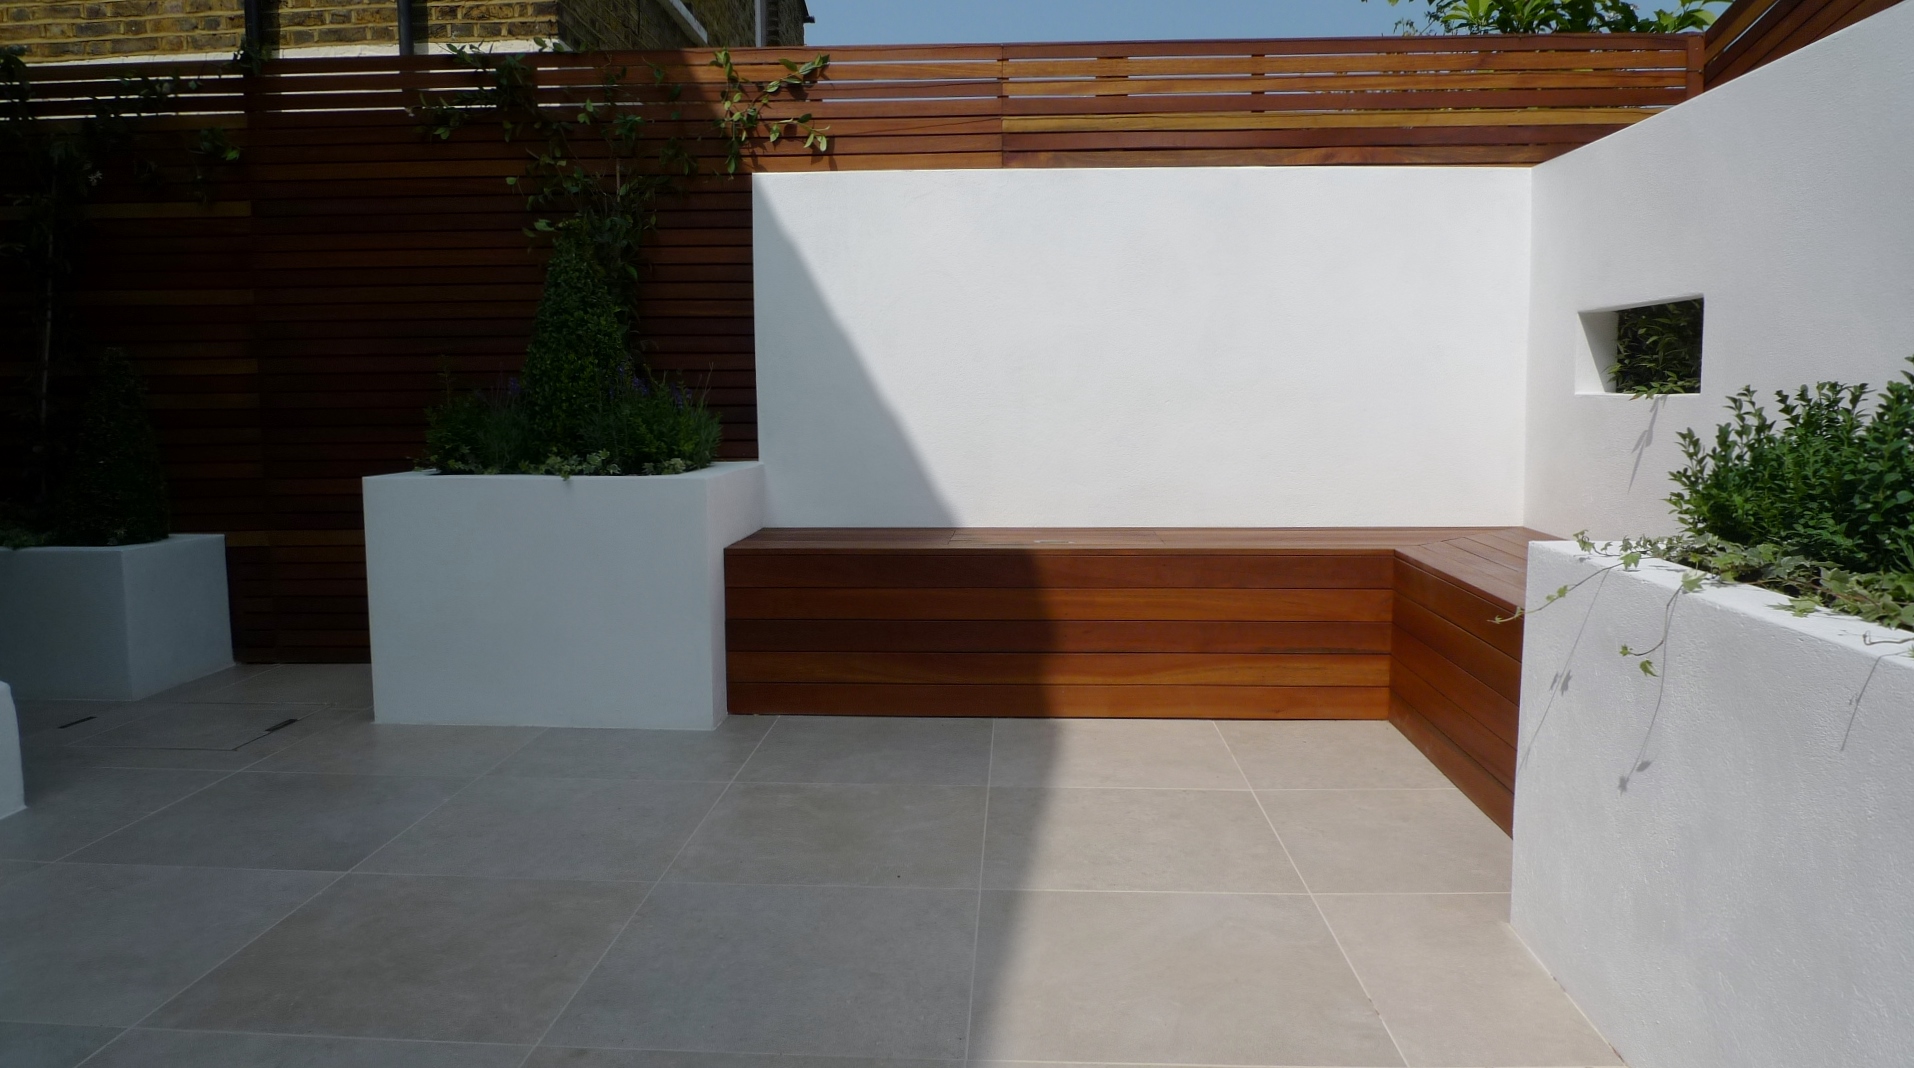 hardwood storage bench raised block rendered walls stunning garden design ideas london